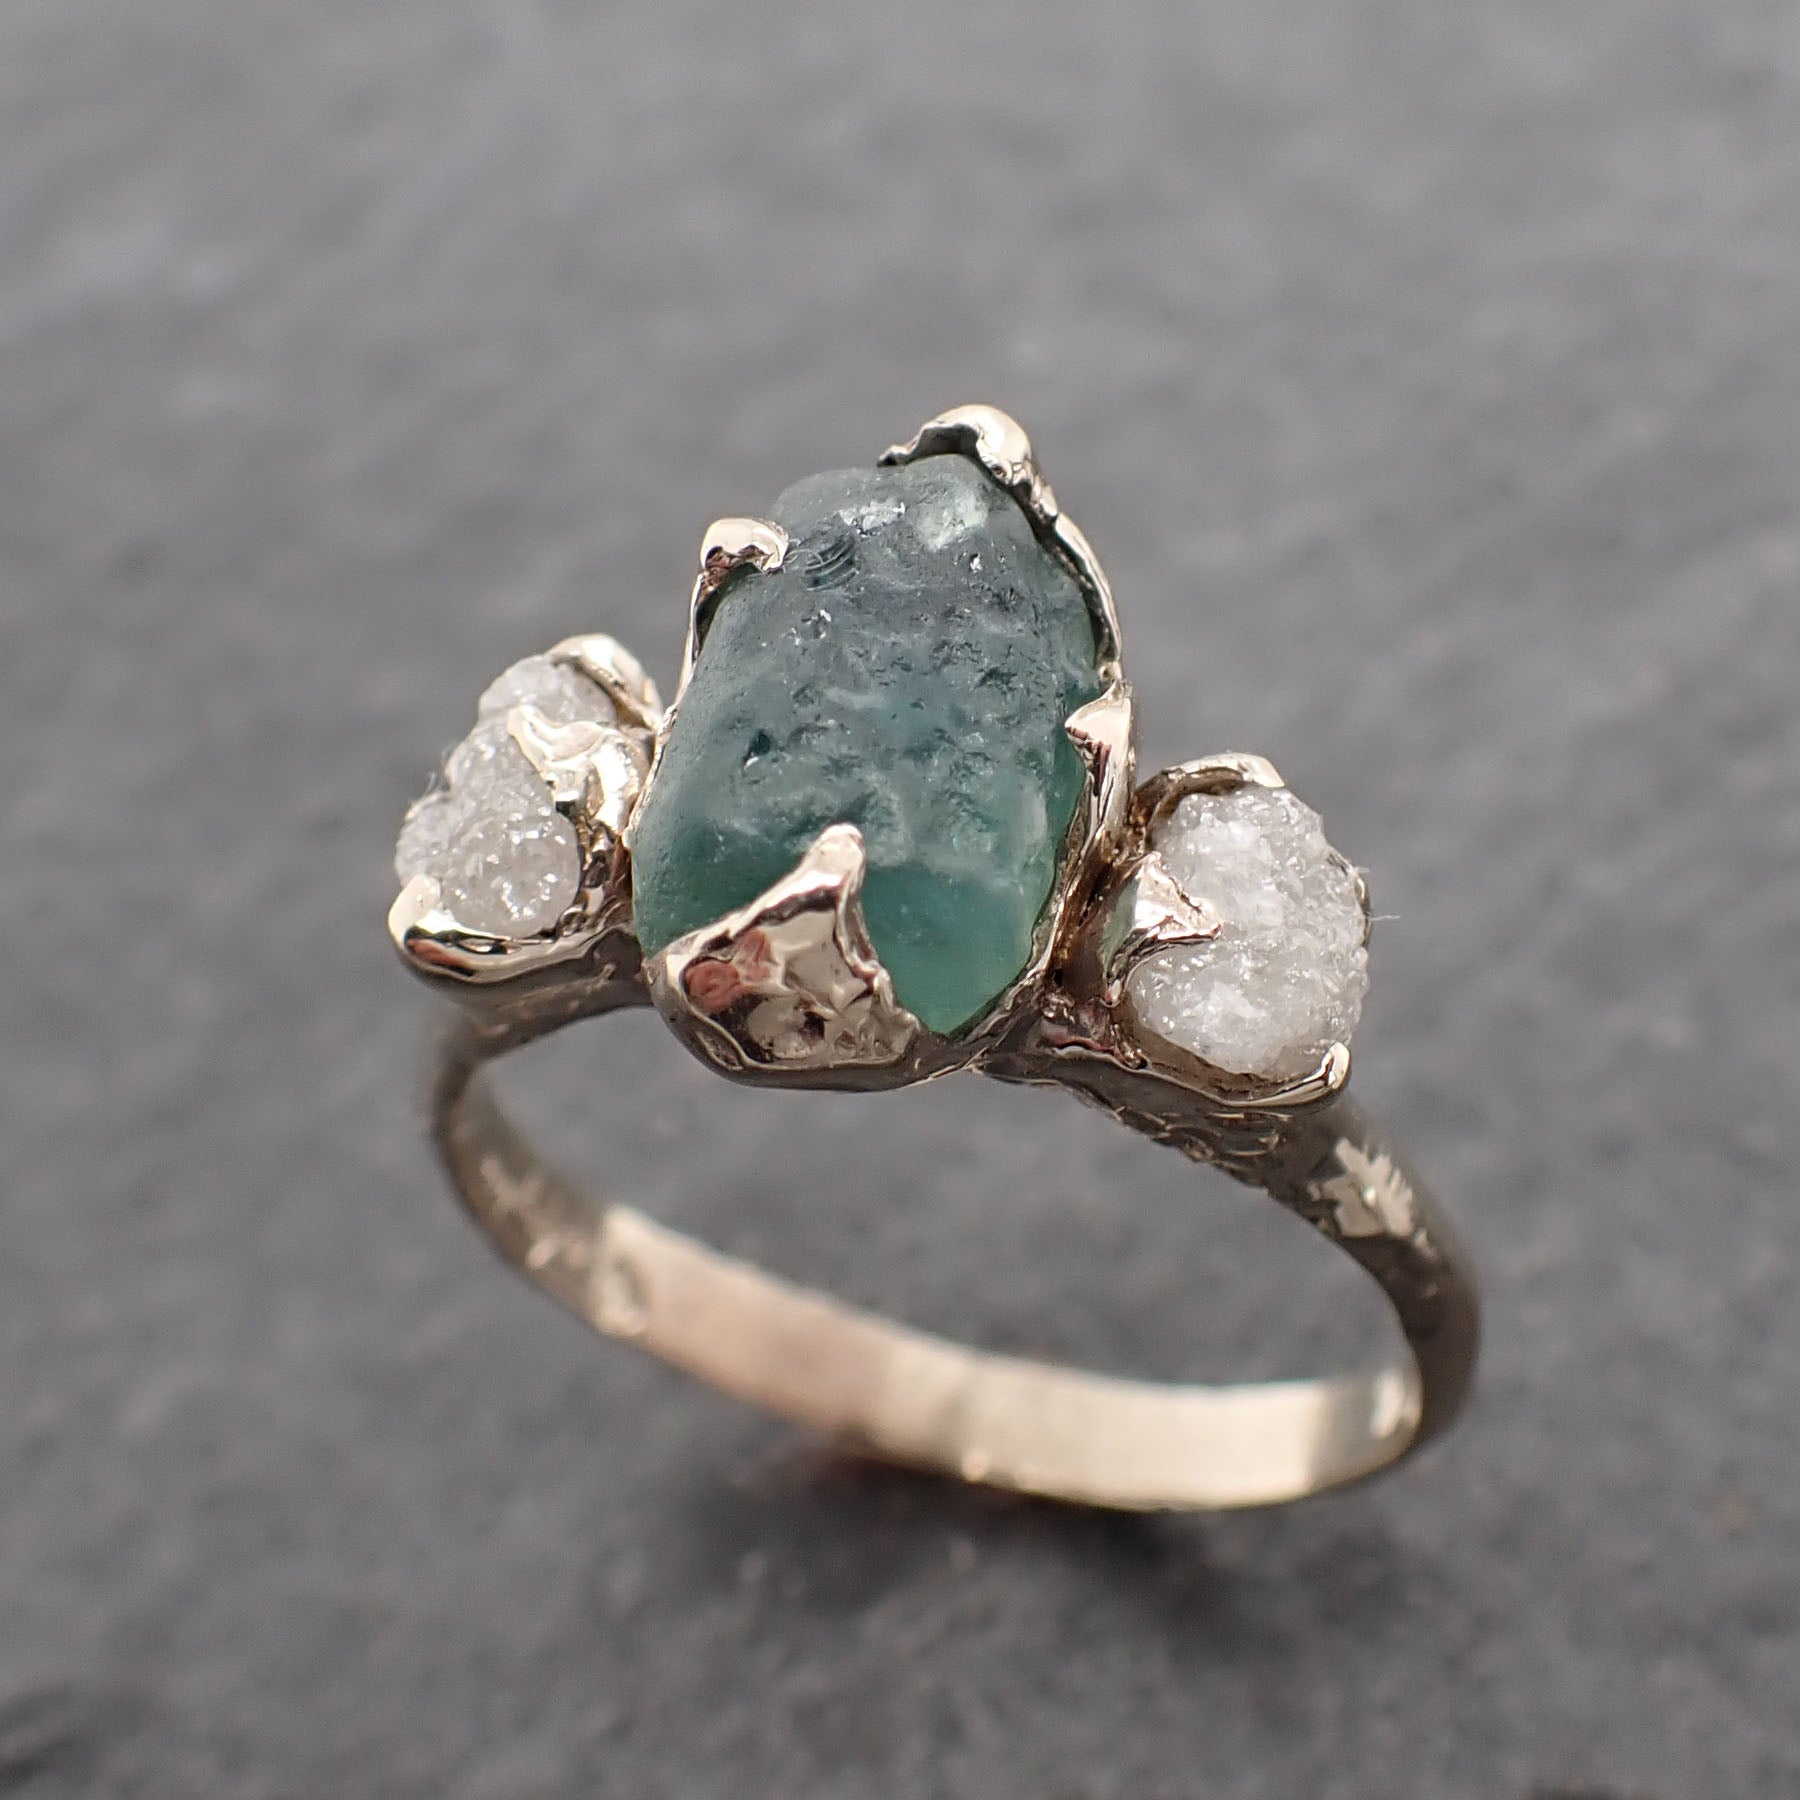 raw blue green montana sapphire diamond 18k white gold engagement wedding ring custom one of a kind gemstone multi stone ring 2477 Alternative Engagement